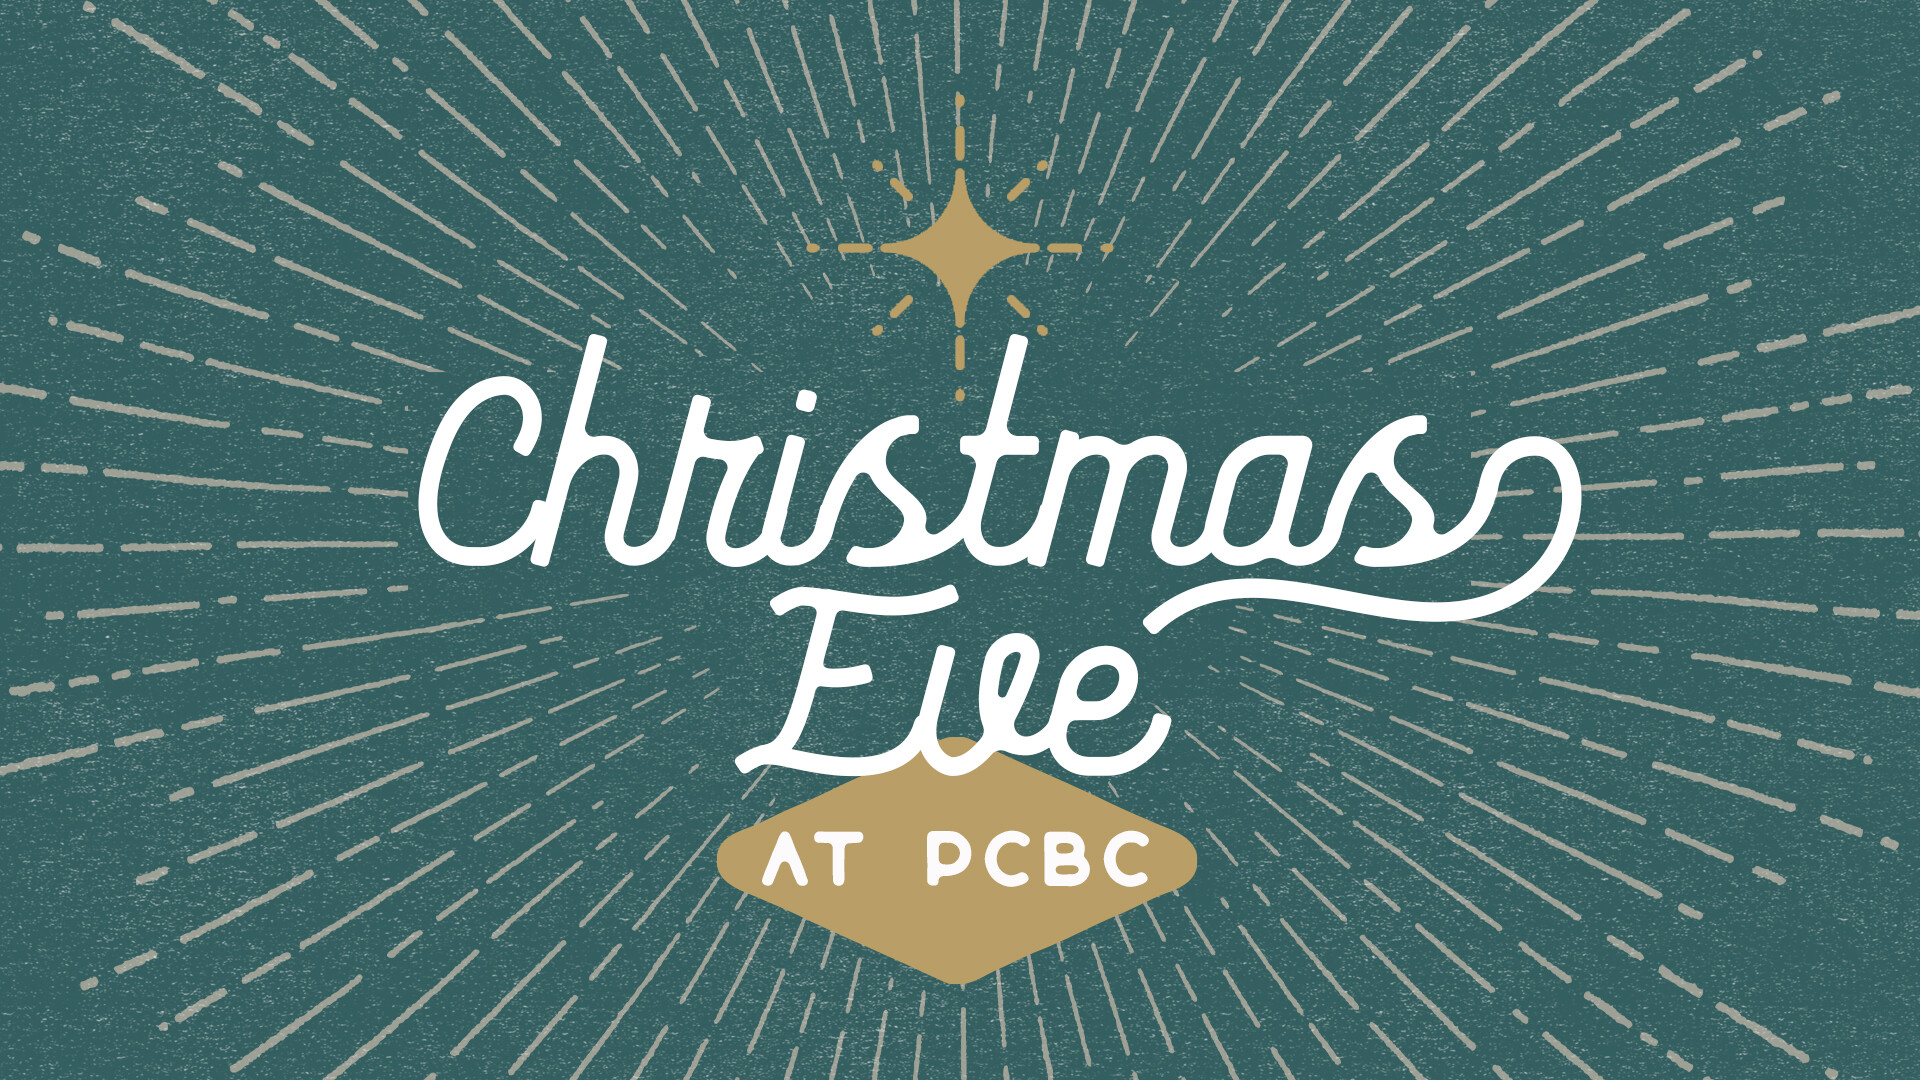 Christmas Eve Services at PCBC - Dec 24 7pm